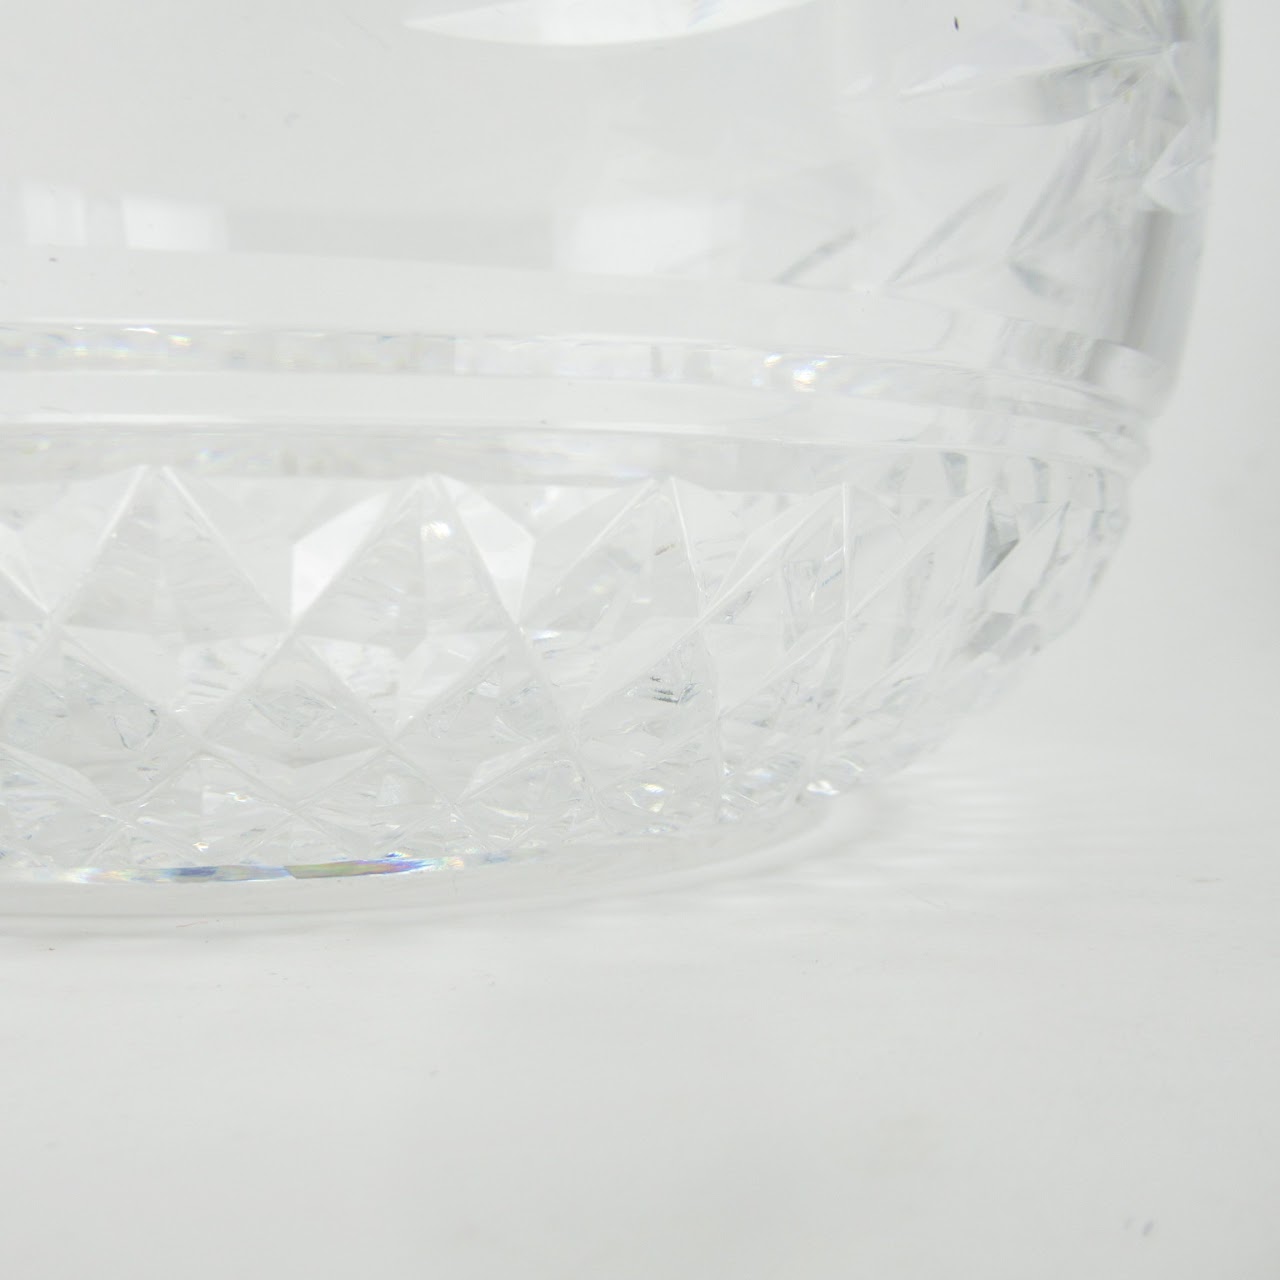 Waterford Cut Crystal Bowl